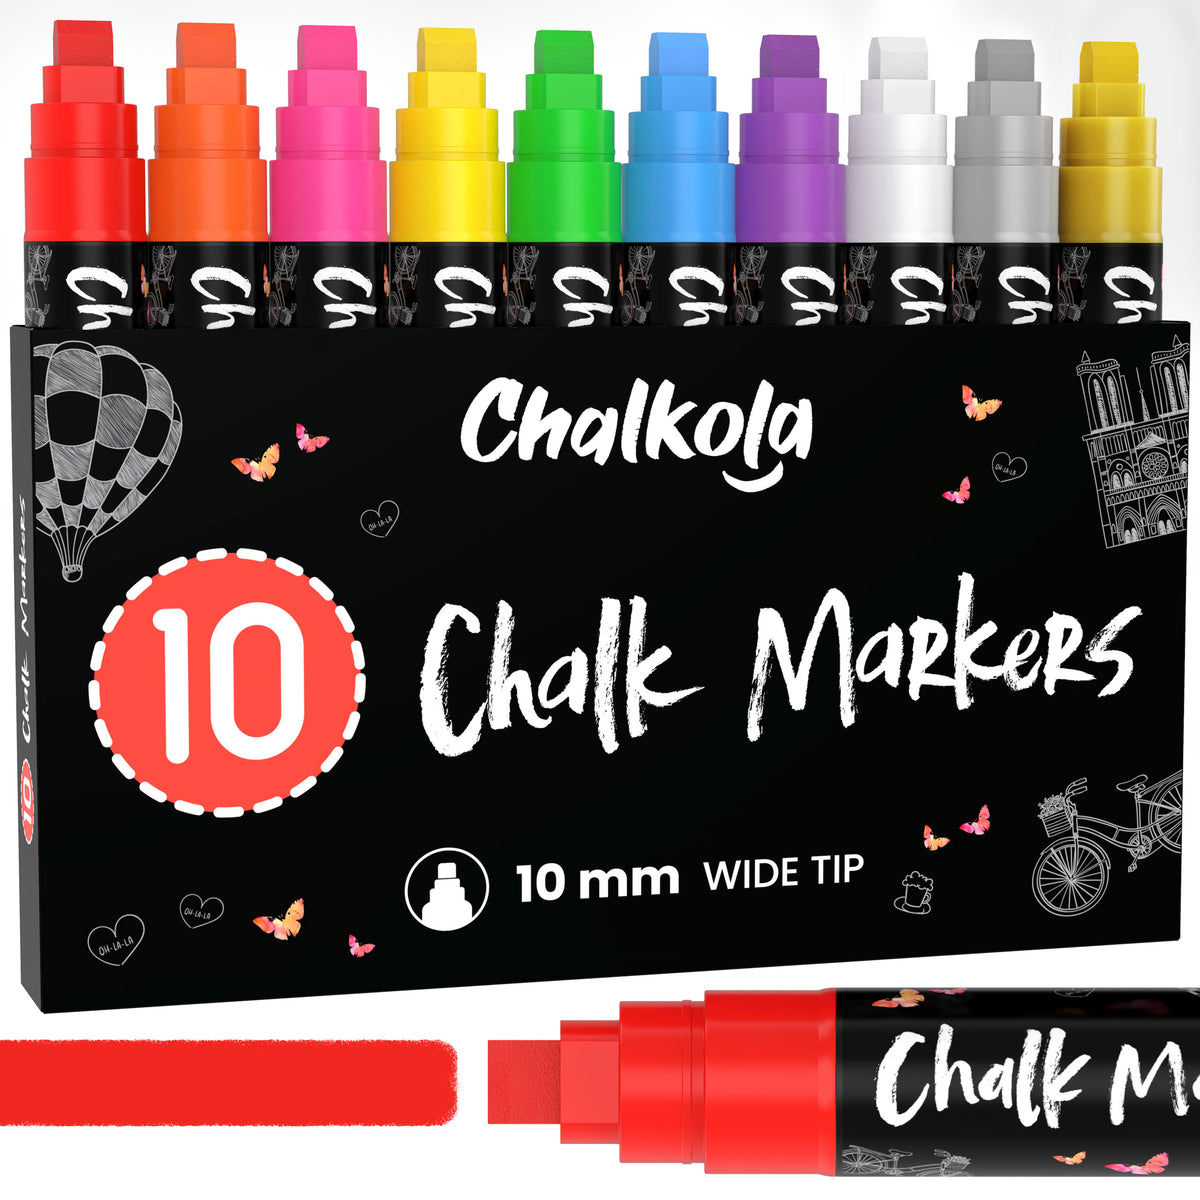 ZODDLE Liquid Chalk Markers, (1mm Extra Fine Tip, 10 Vibrant Colors)  Erasable Marker Pen - For Blackboards, Chalkboard, Glass, Window, Label  Liquid Chalk-10